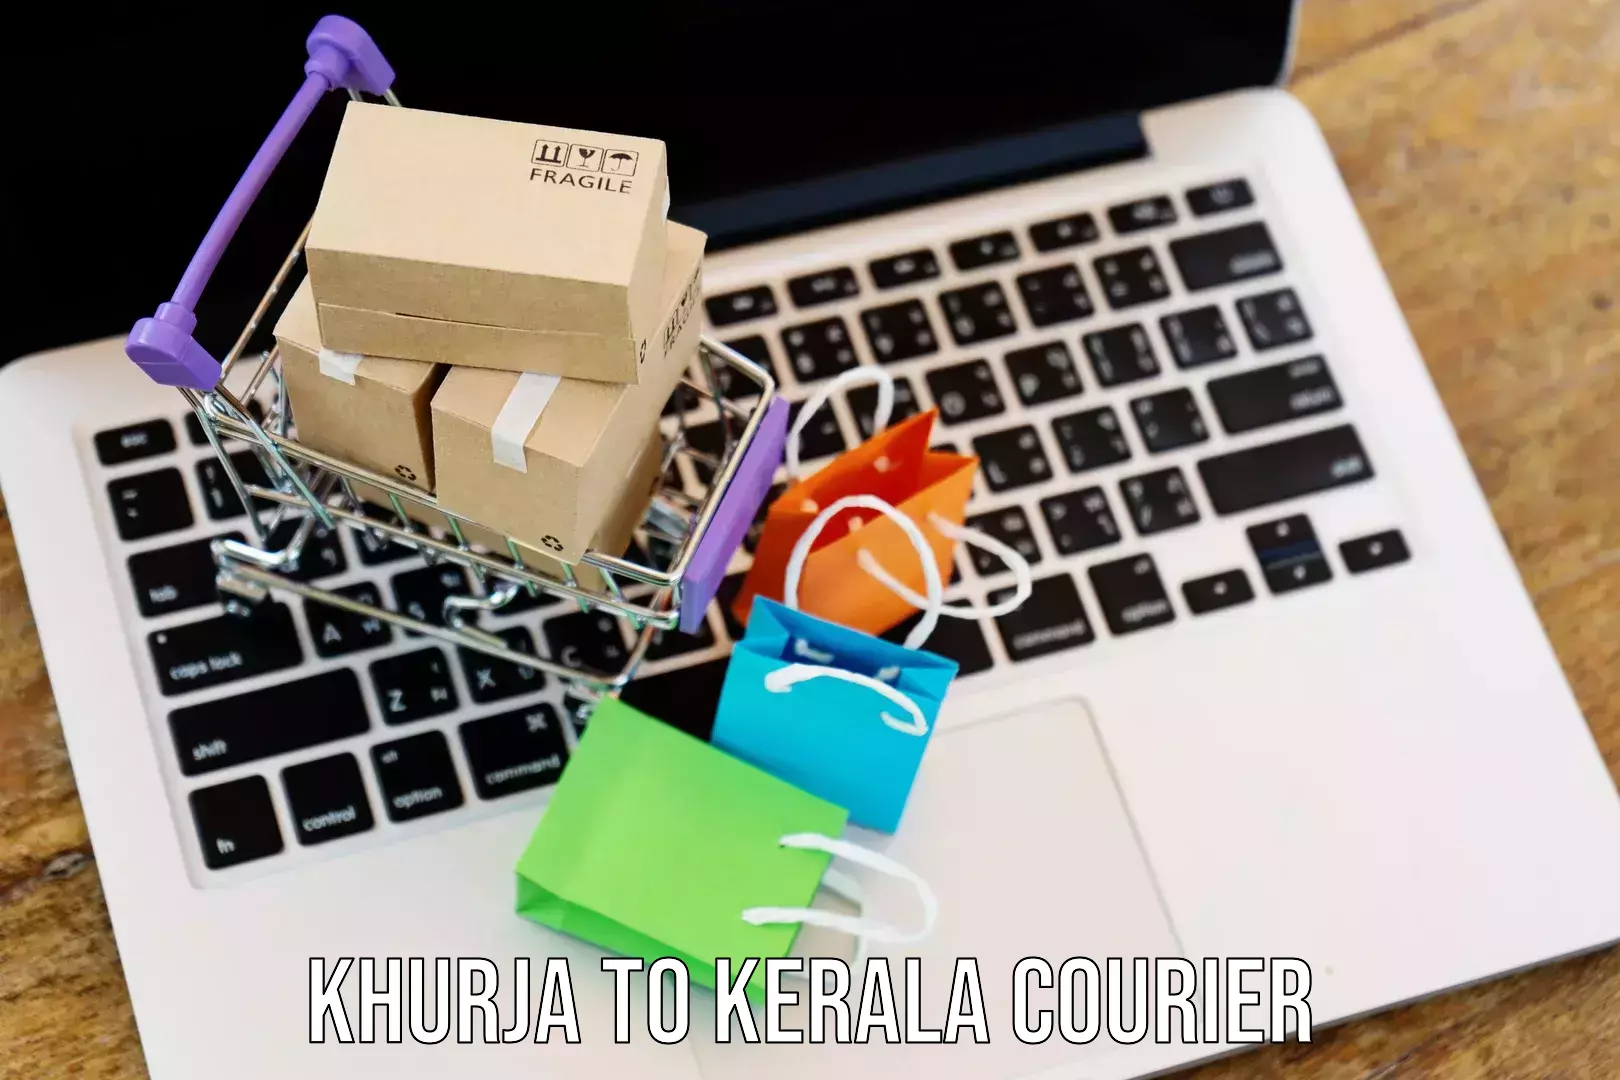 Digital courier platforms Khurja to Kerala